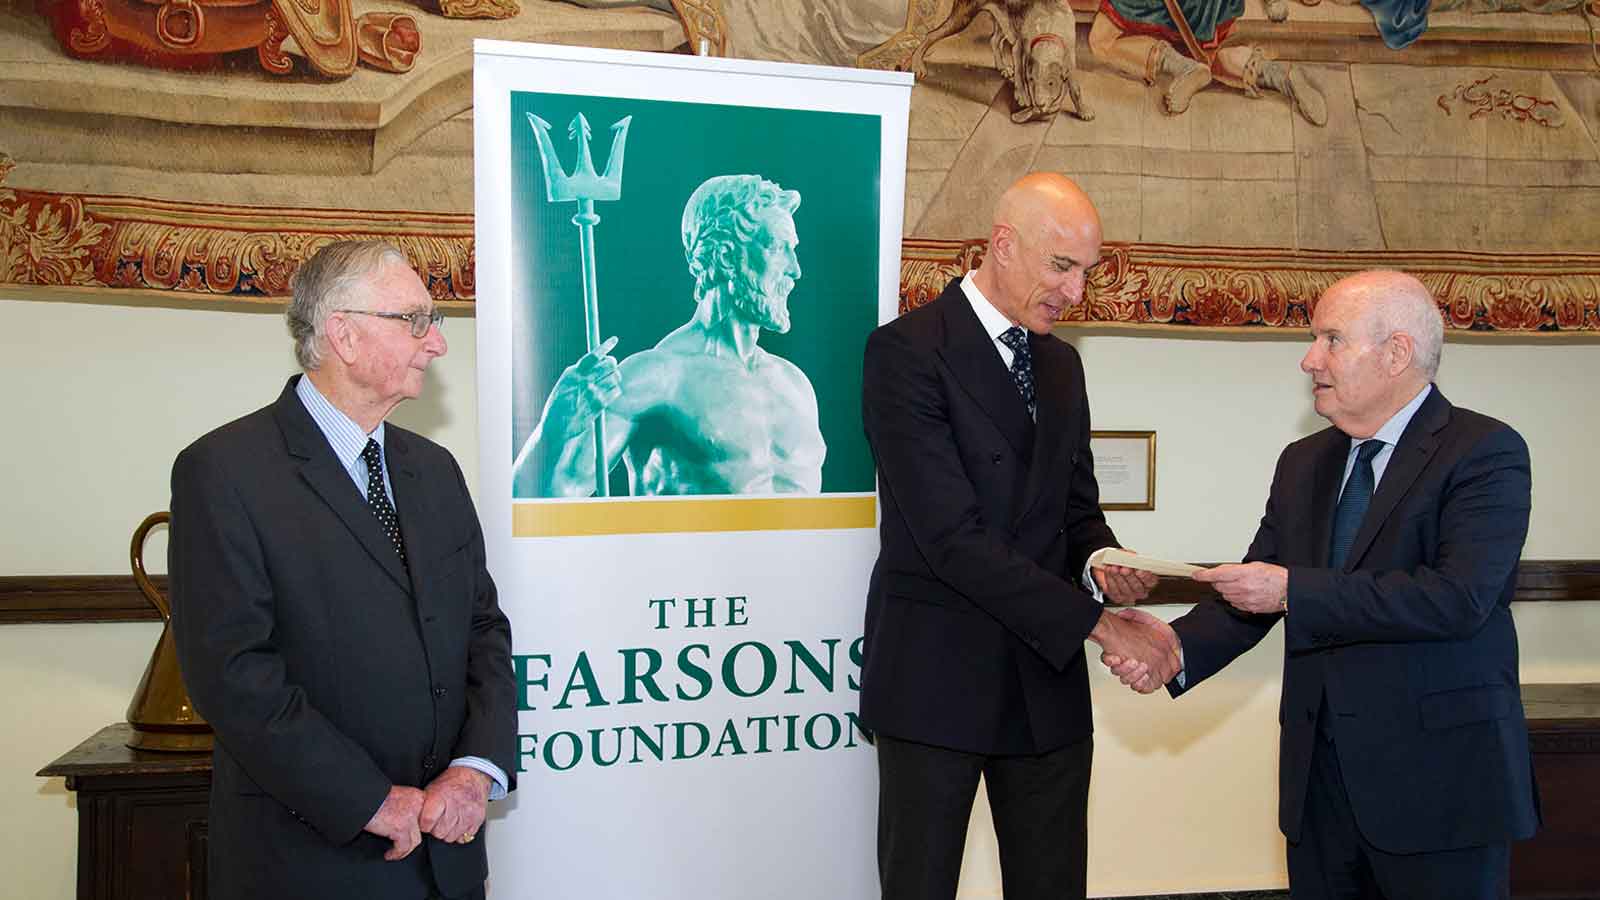 The Farsons Foundation, Simonds Farsons Cisk plc support Fondazzjoni Patrimonju Malti